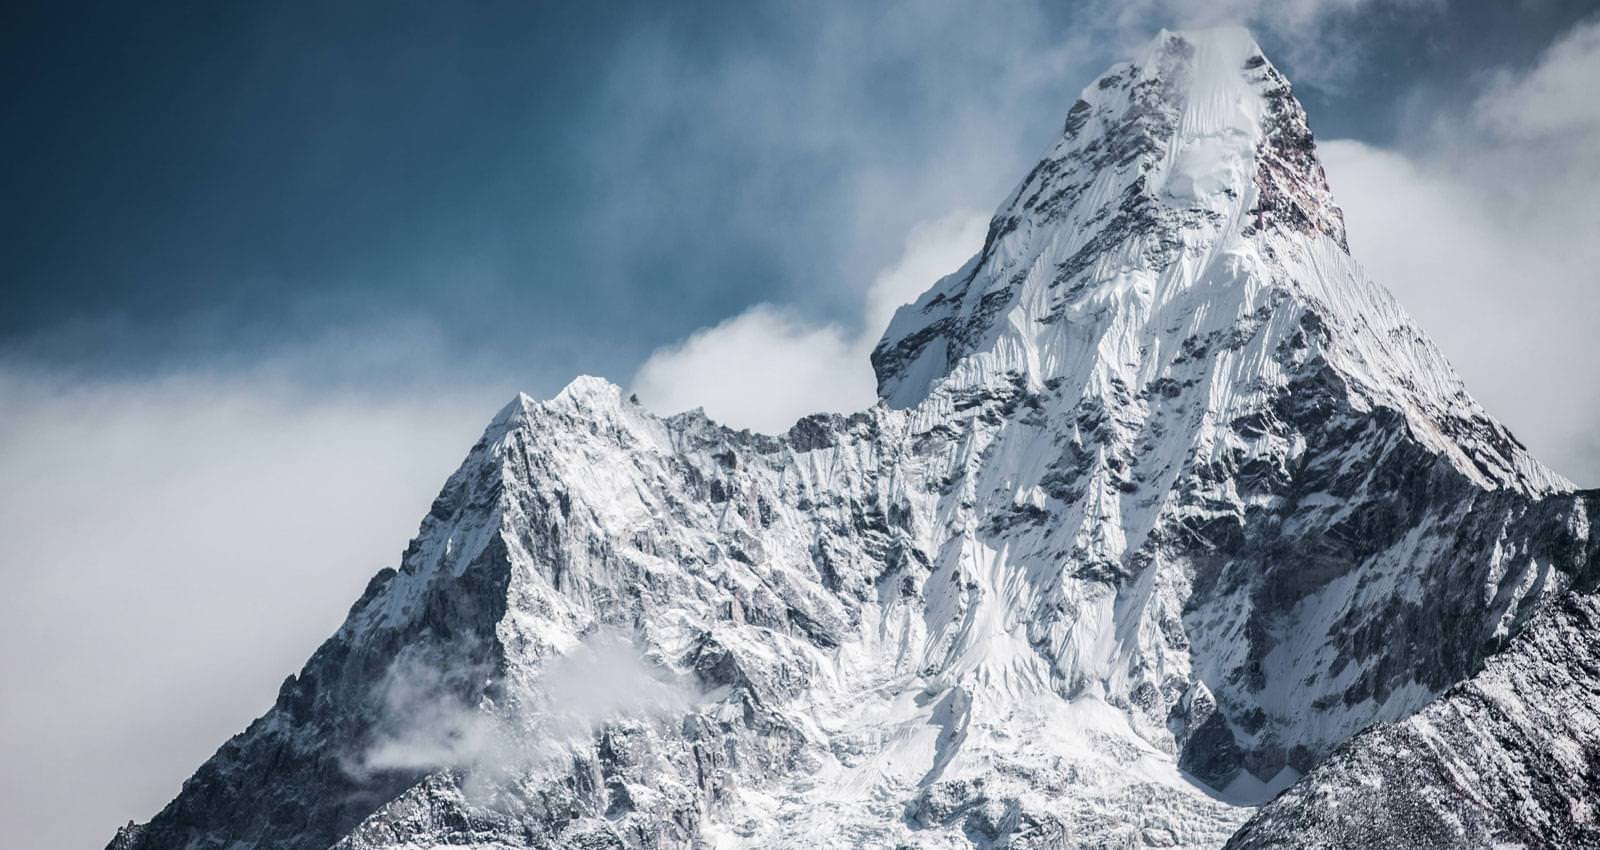 Everest Base Camp Trek: A hike to the world's highest peak